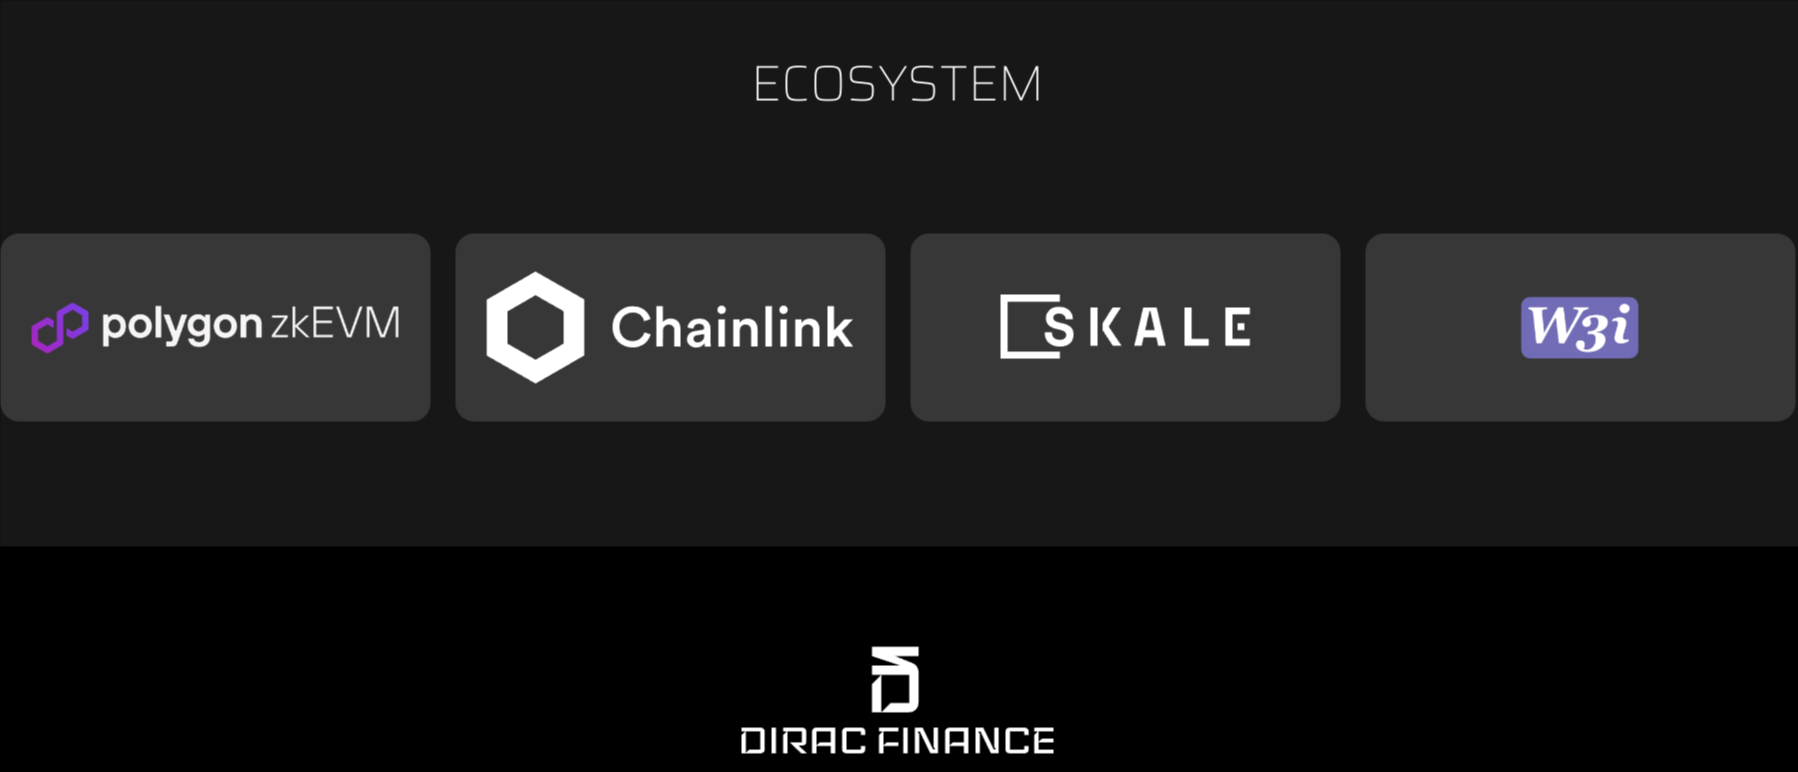 Dirac Finance Ecosystem